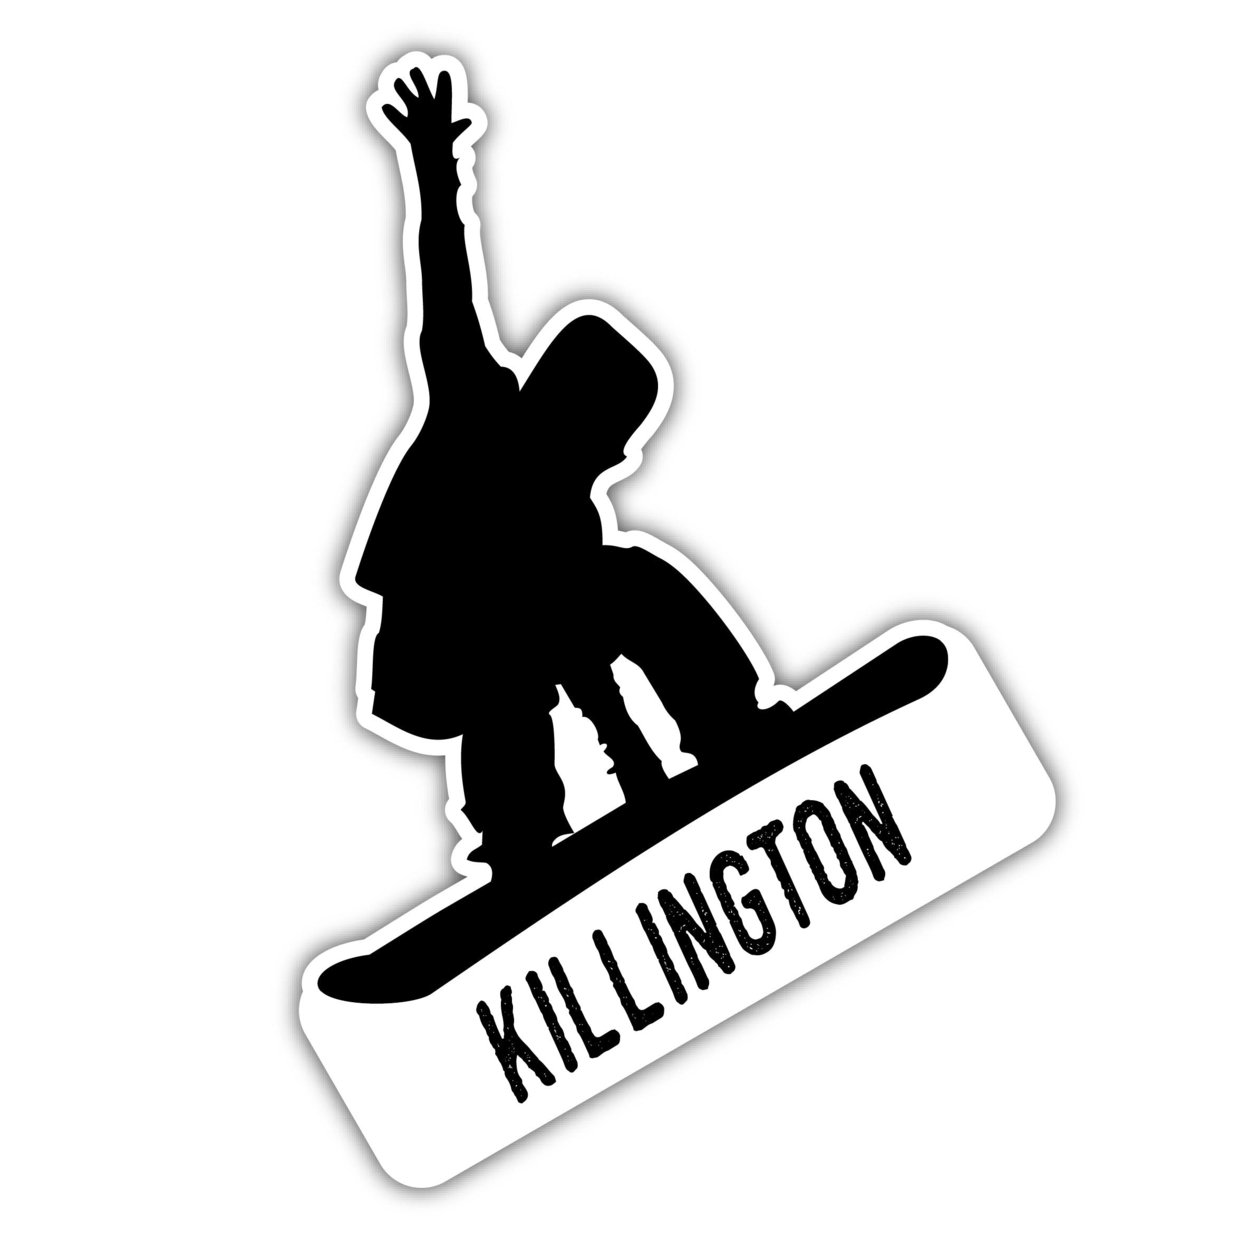 Killington Vermont Ski Adventures Souvenir Approximately 5 X 2.5-Inch Vinyl Decal Sticker Goggle Design